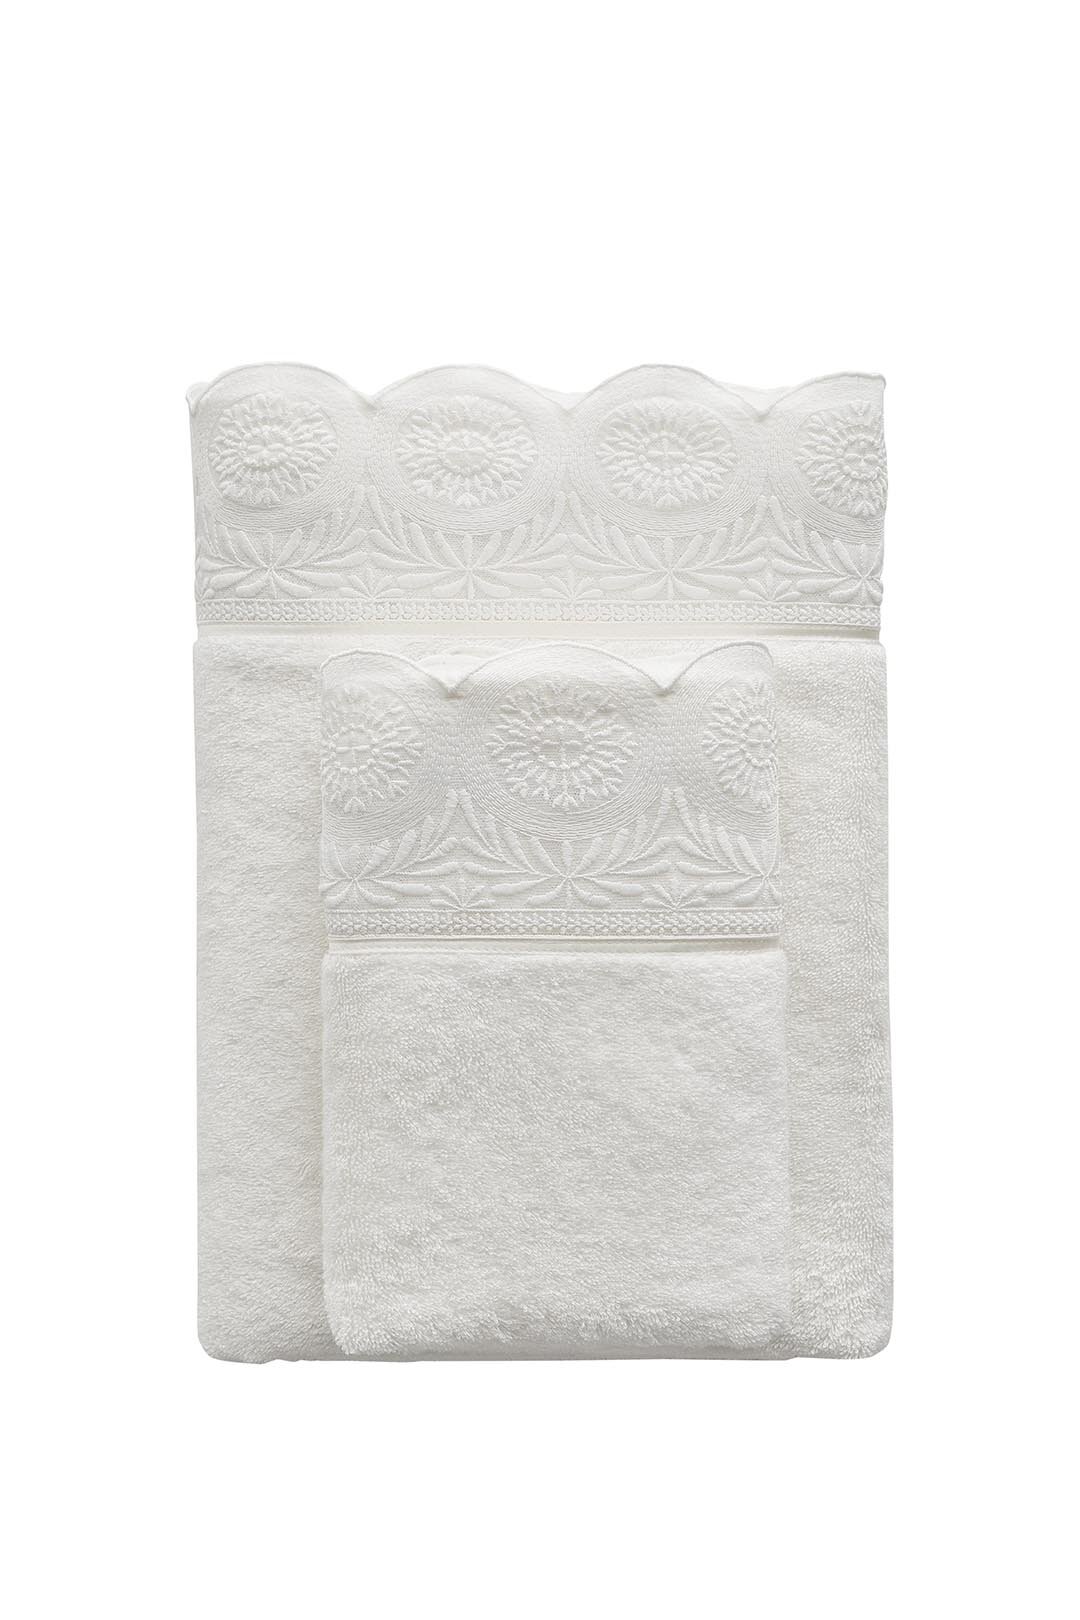 Soft cotton Полотенце Hosannah цвет: молочный (50х100 см)